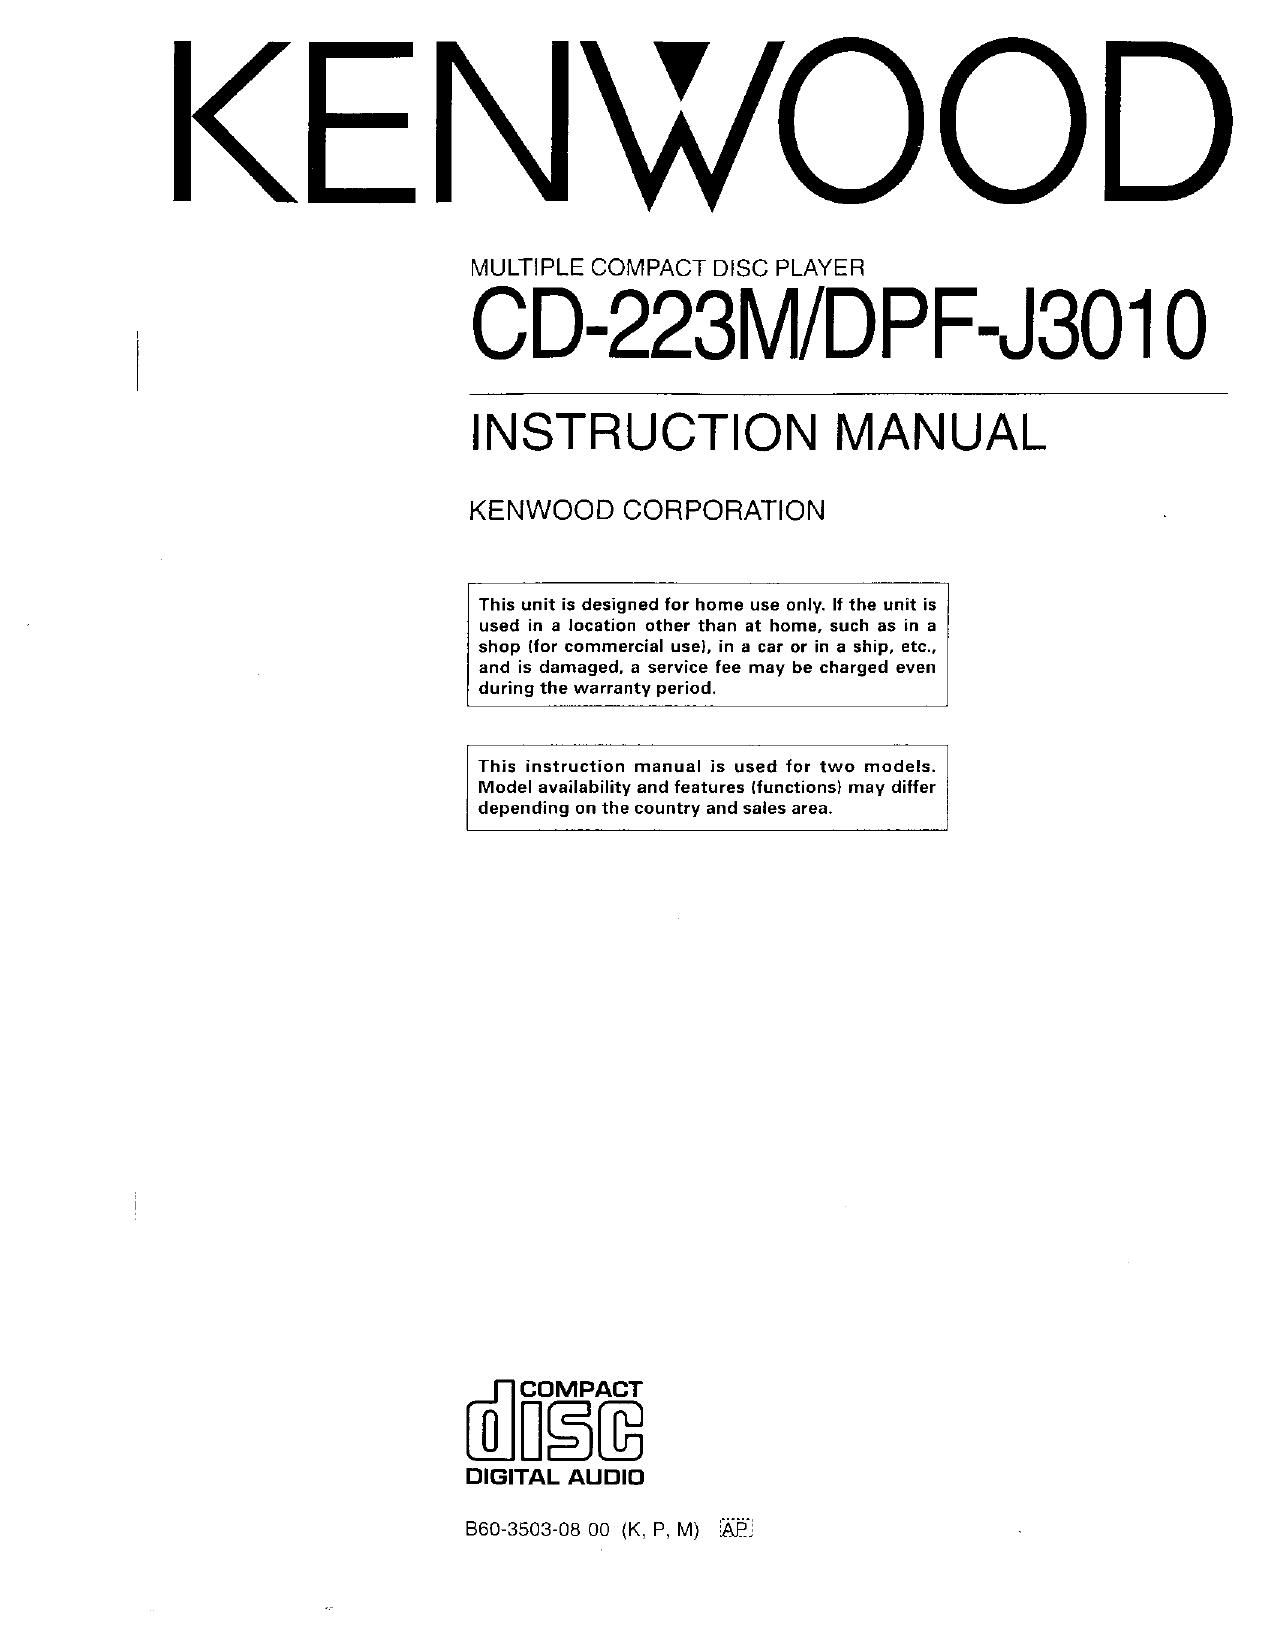 Kenwood CDDPFJ 3010 Owners Manual